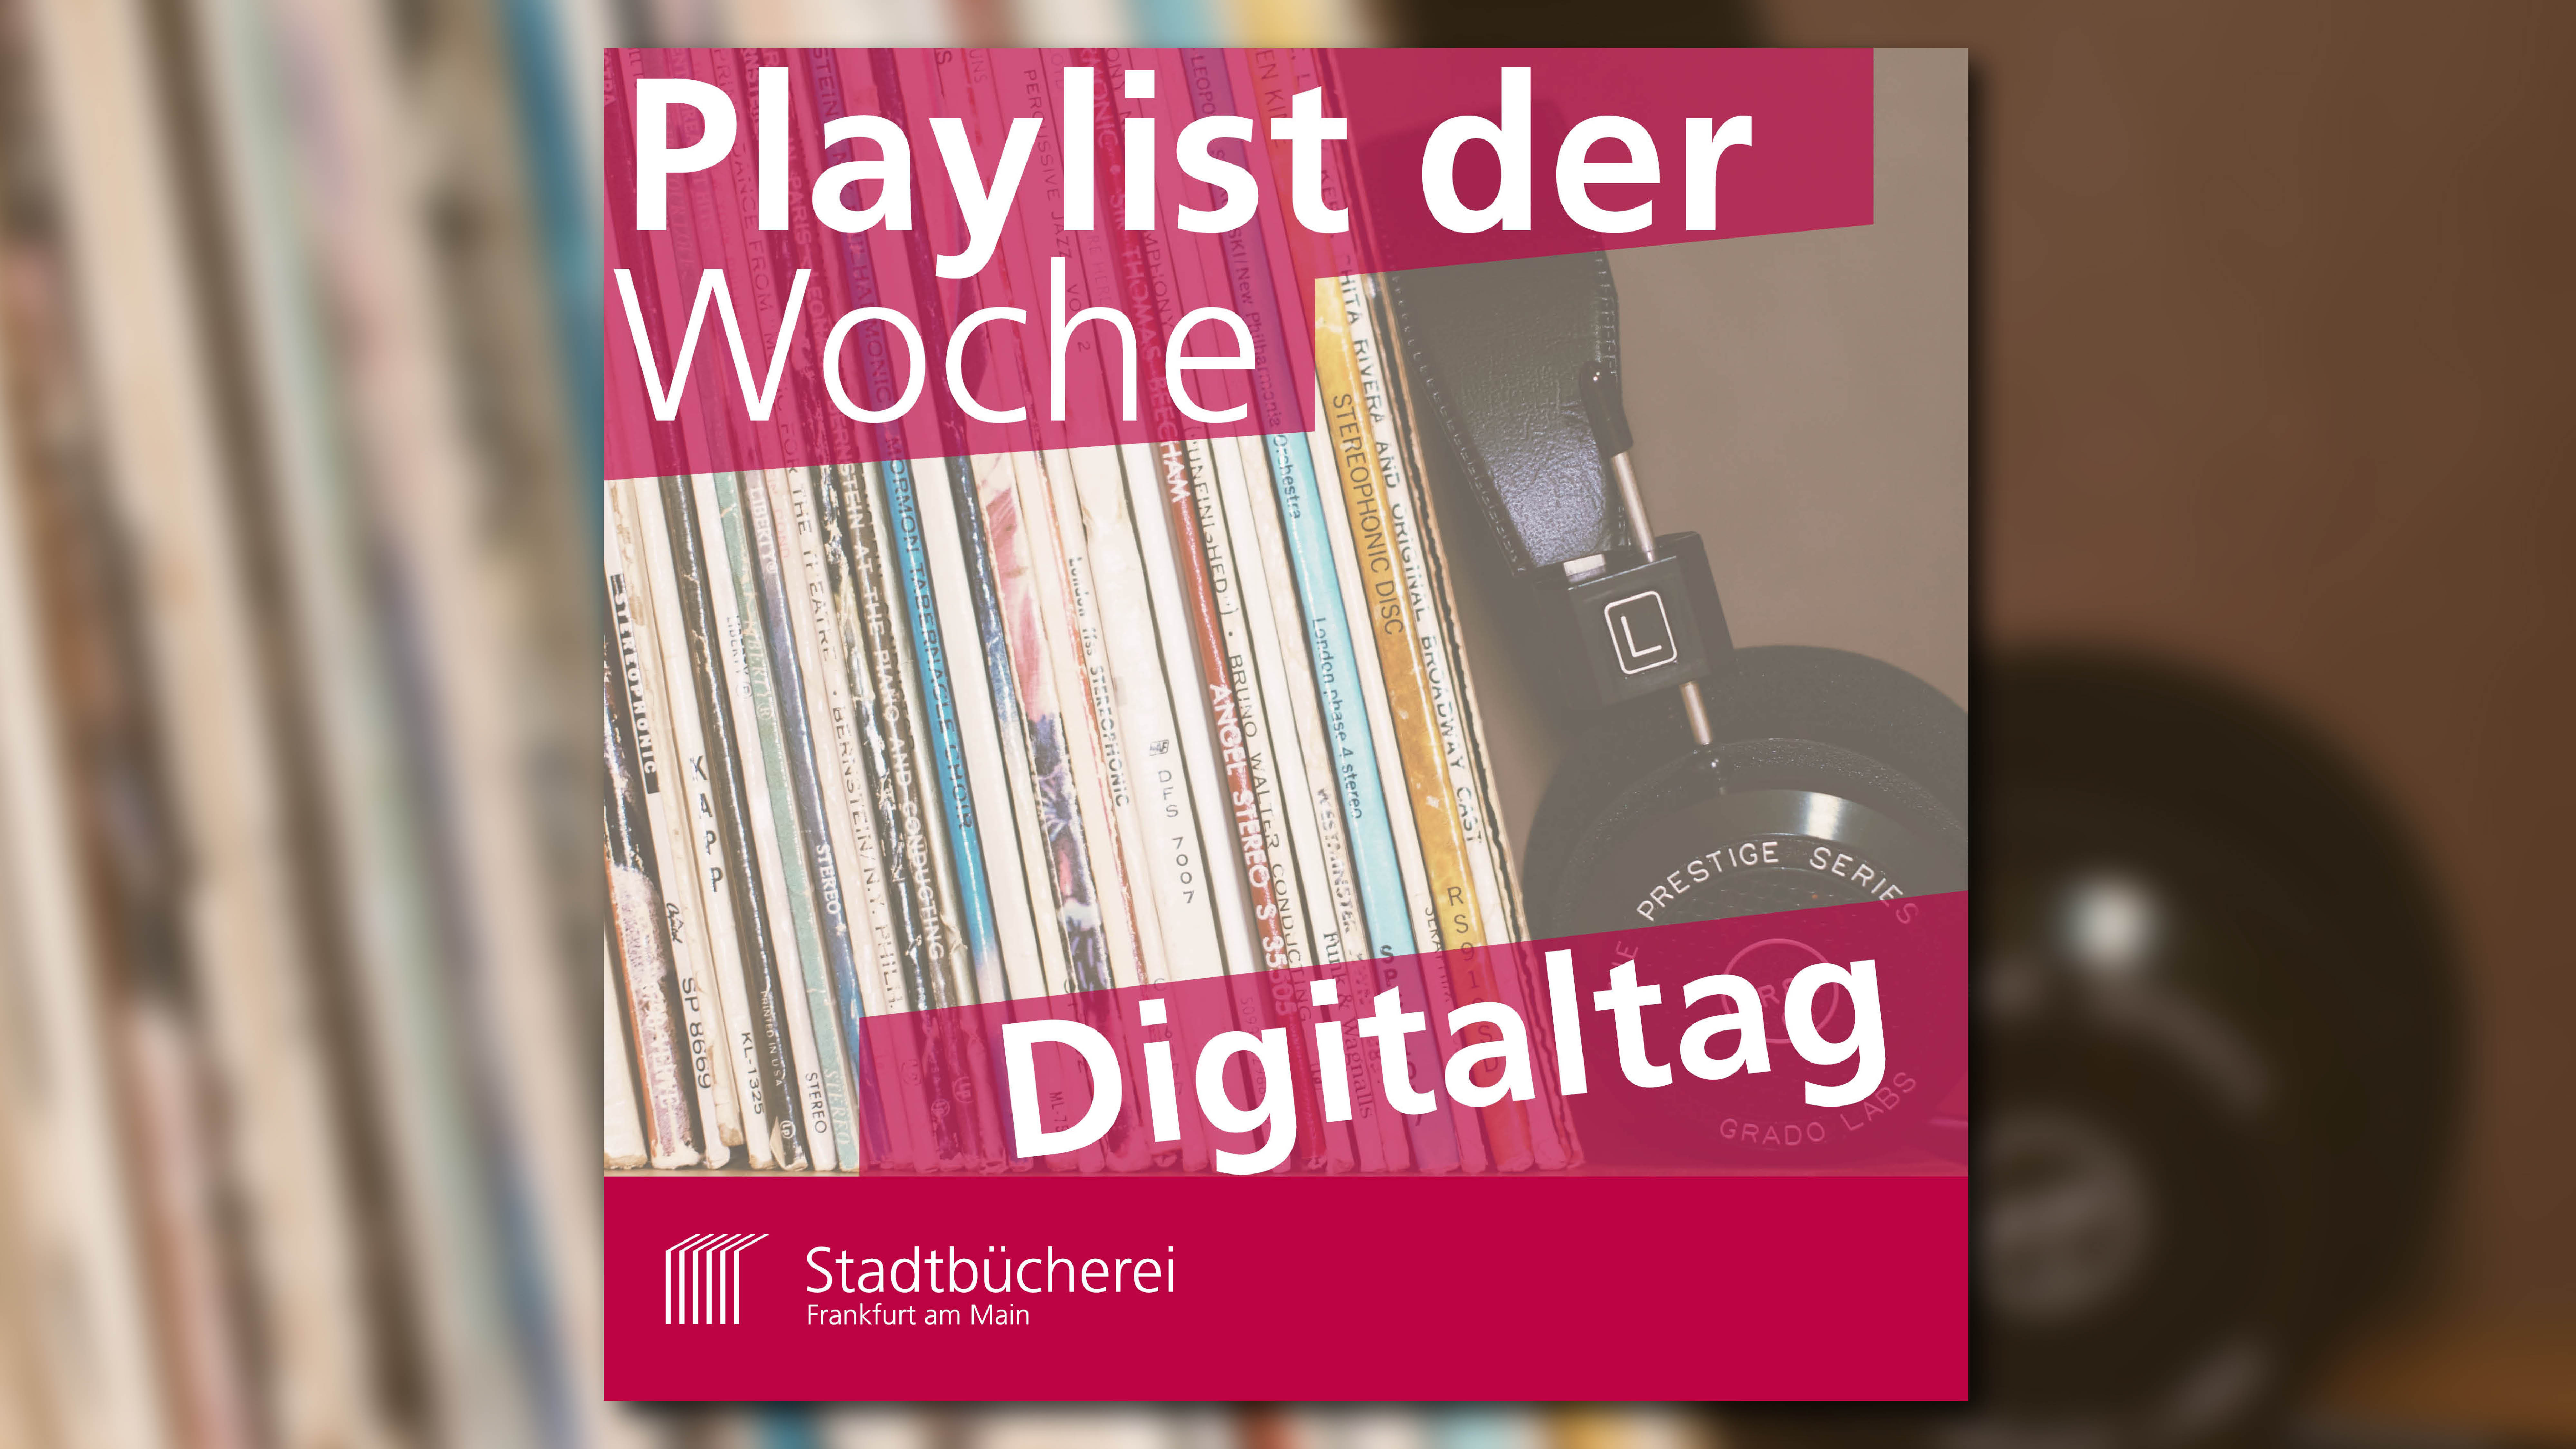 Spotify-Playlist "Alles digital"